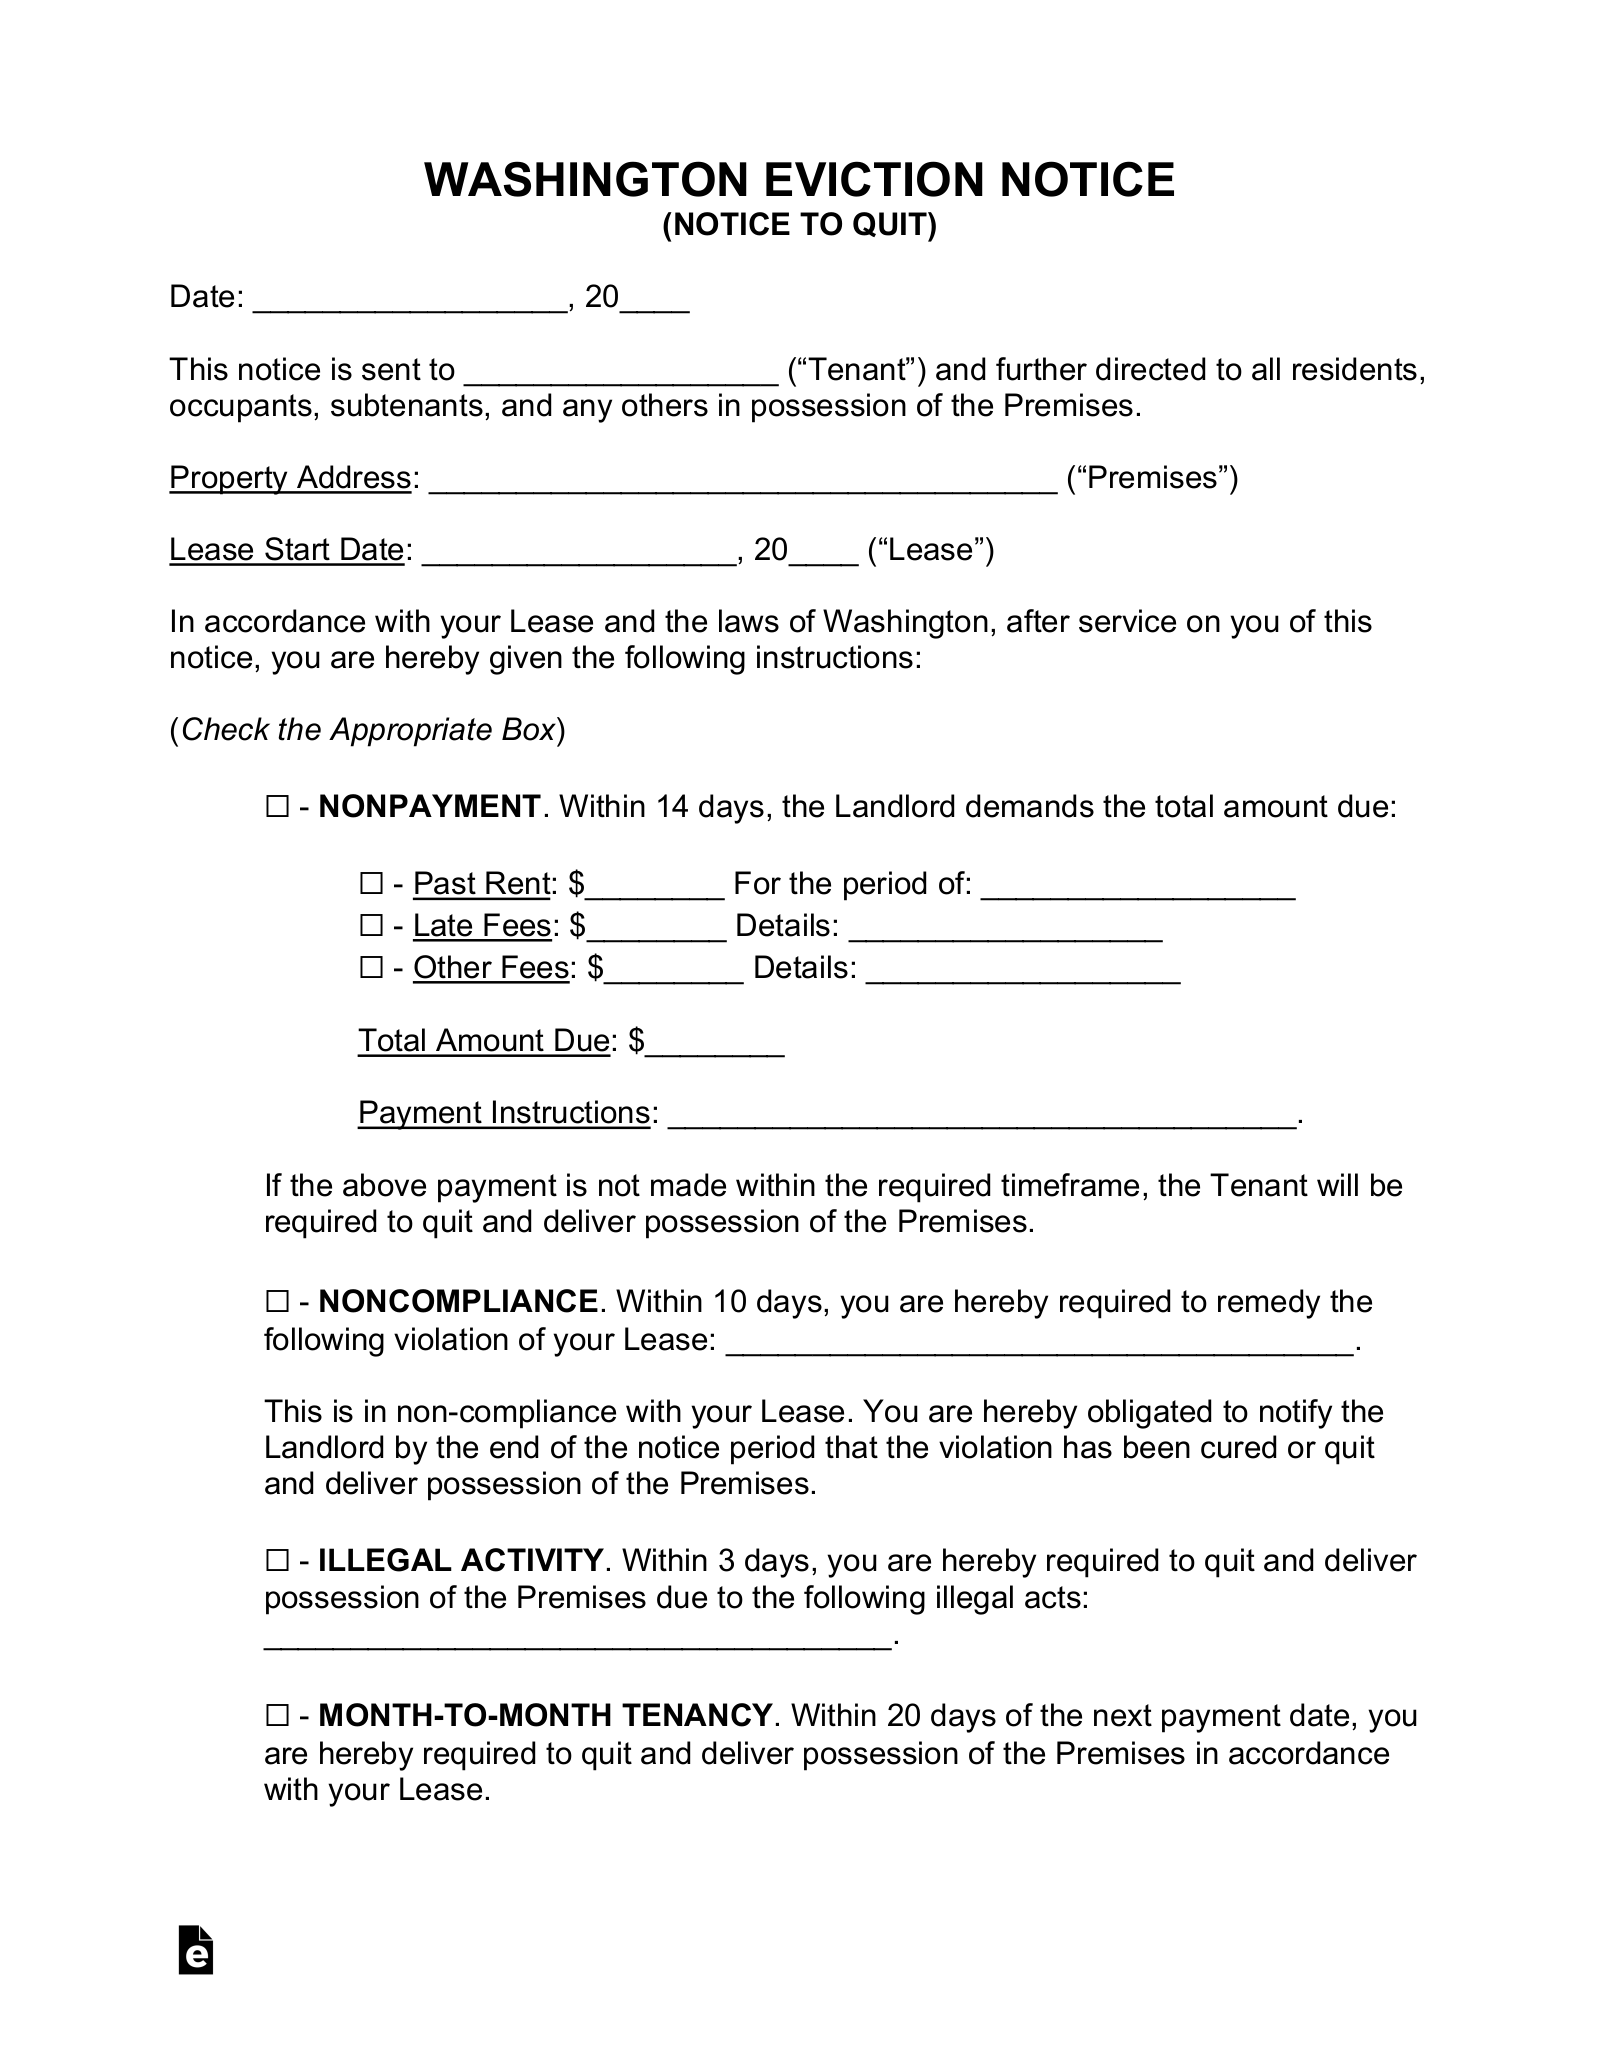 Washington Eviction Notice Forms (4)